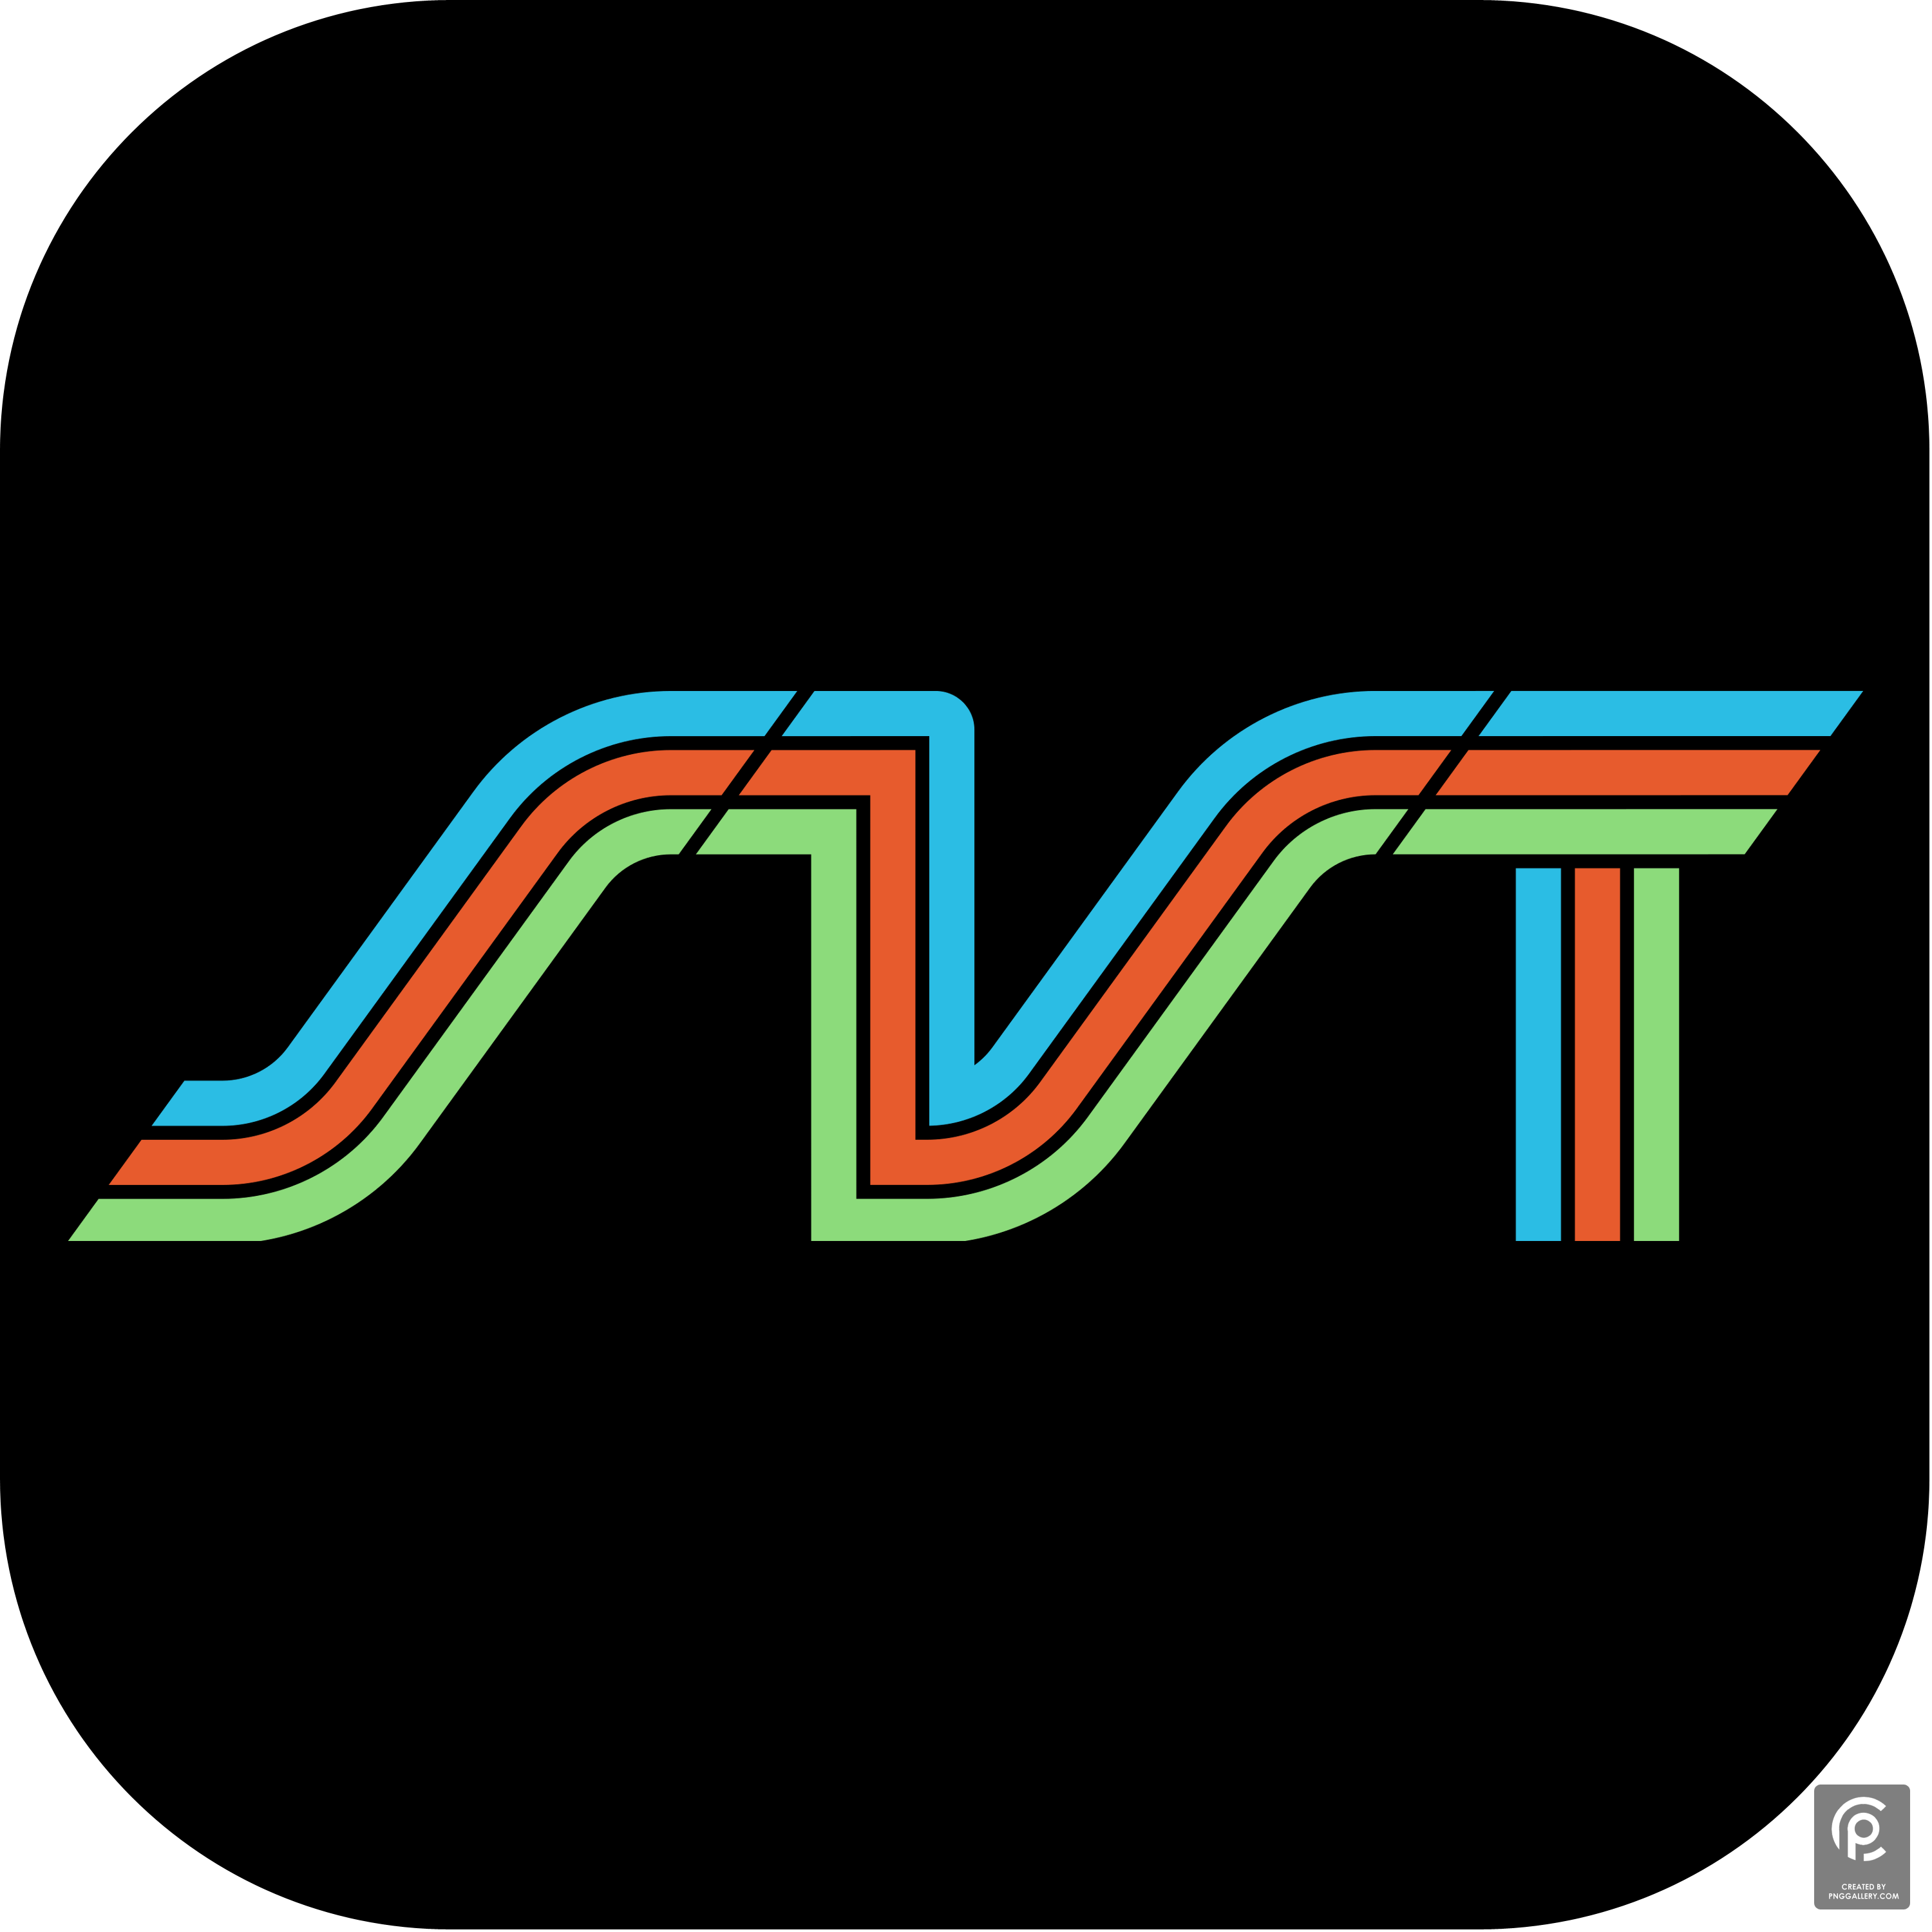 SVT 1980 Logo Transparent Picture